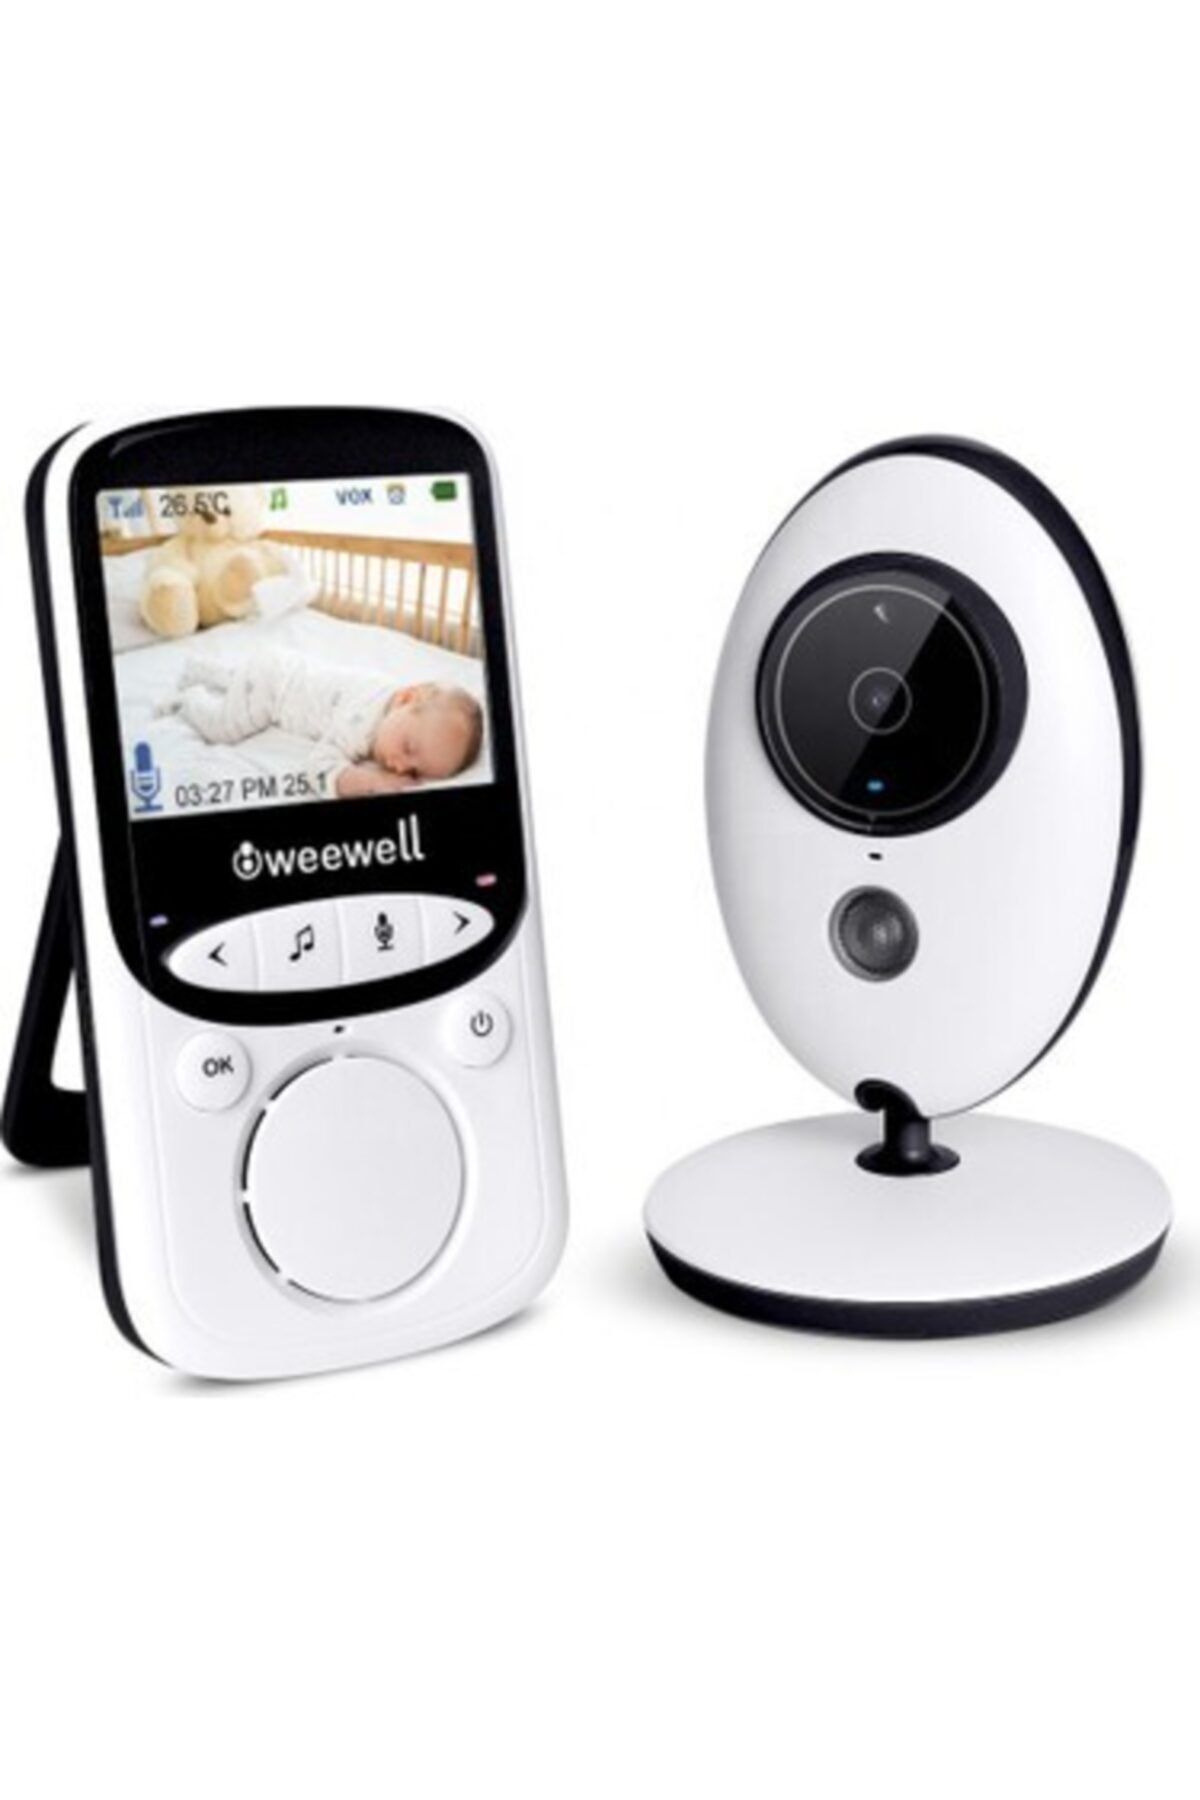 Weewell Wmv815 Dijital Bebek Kamerası